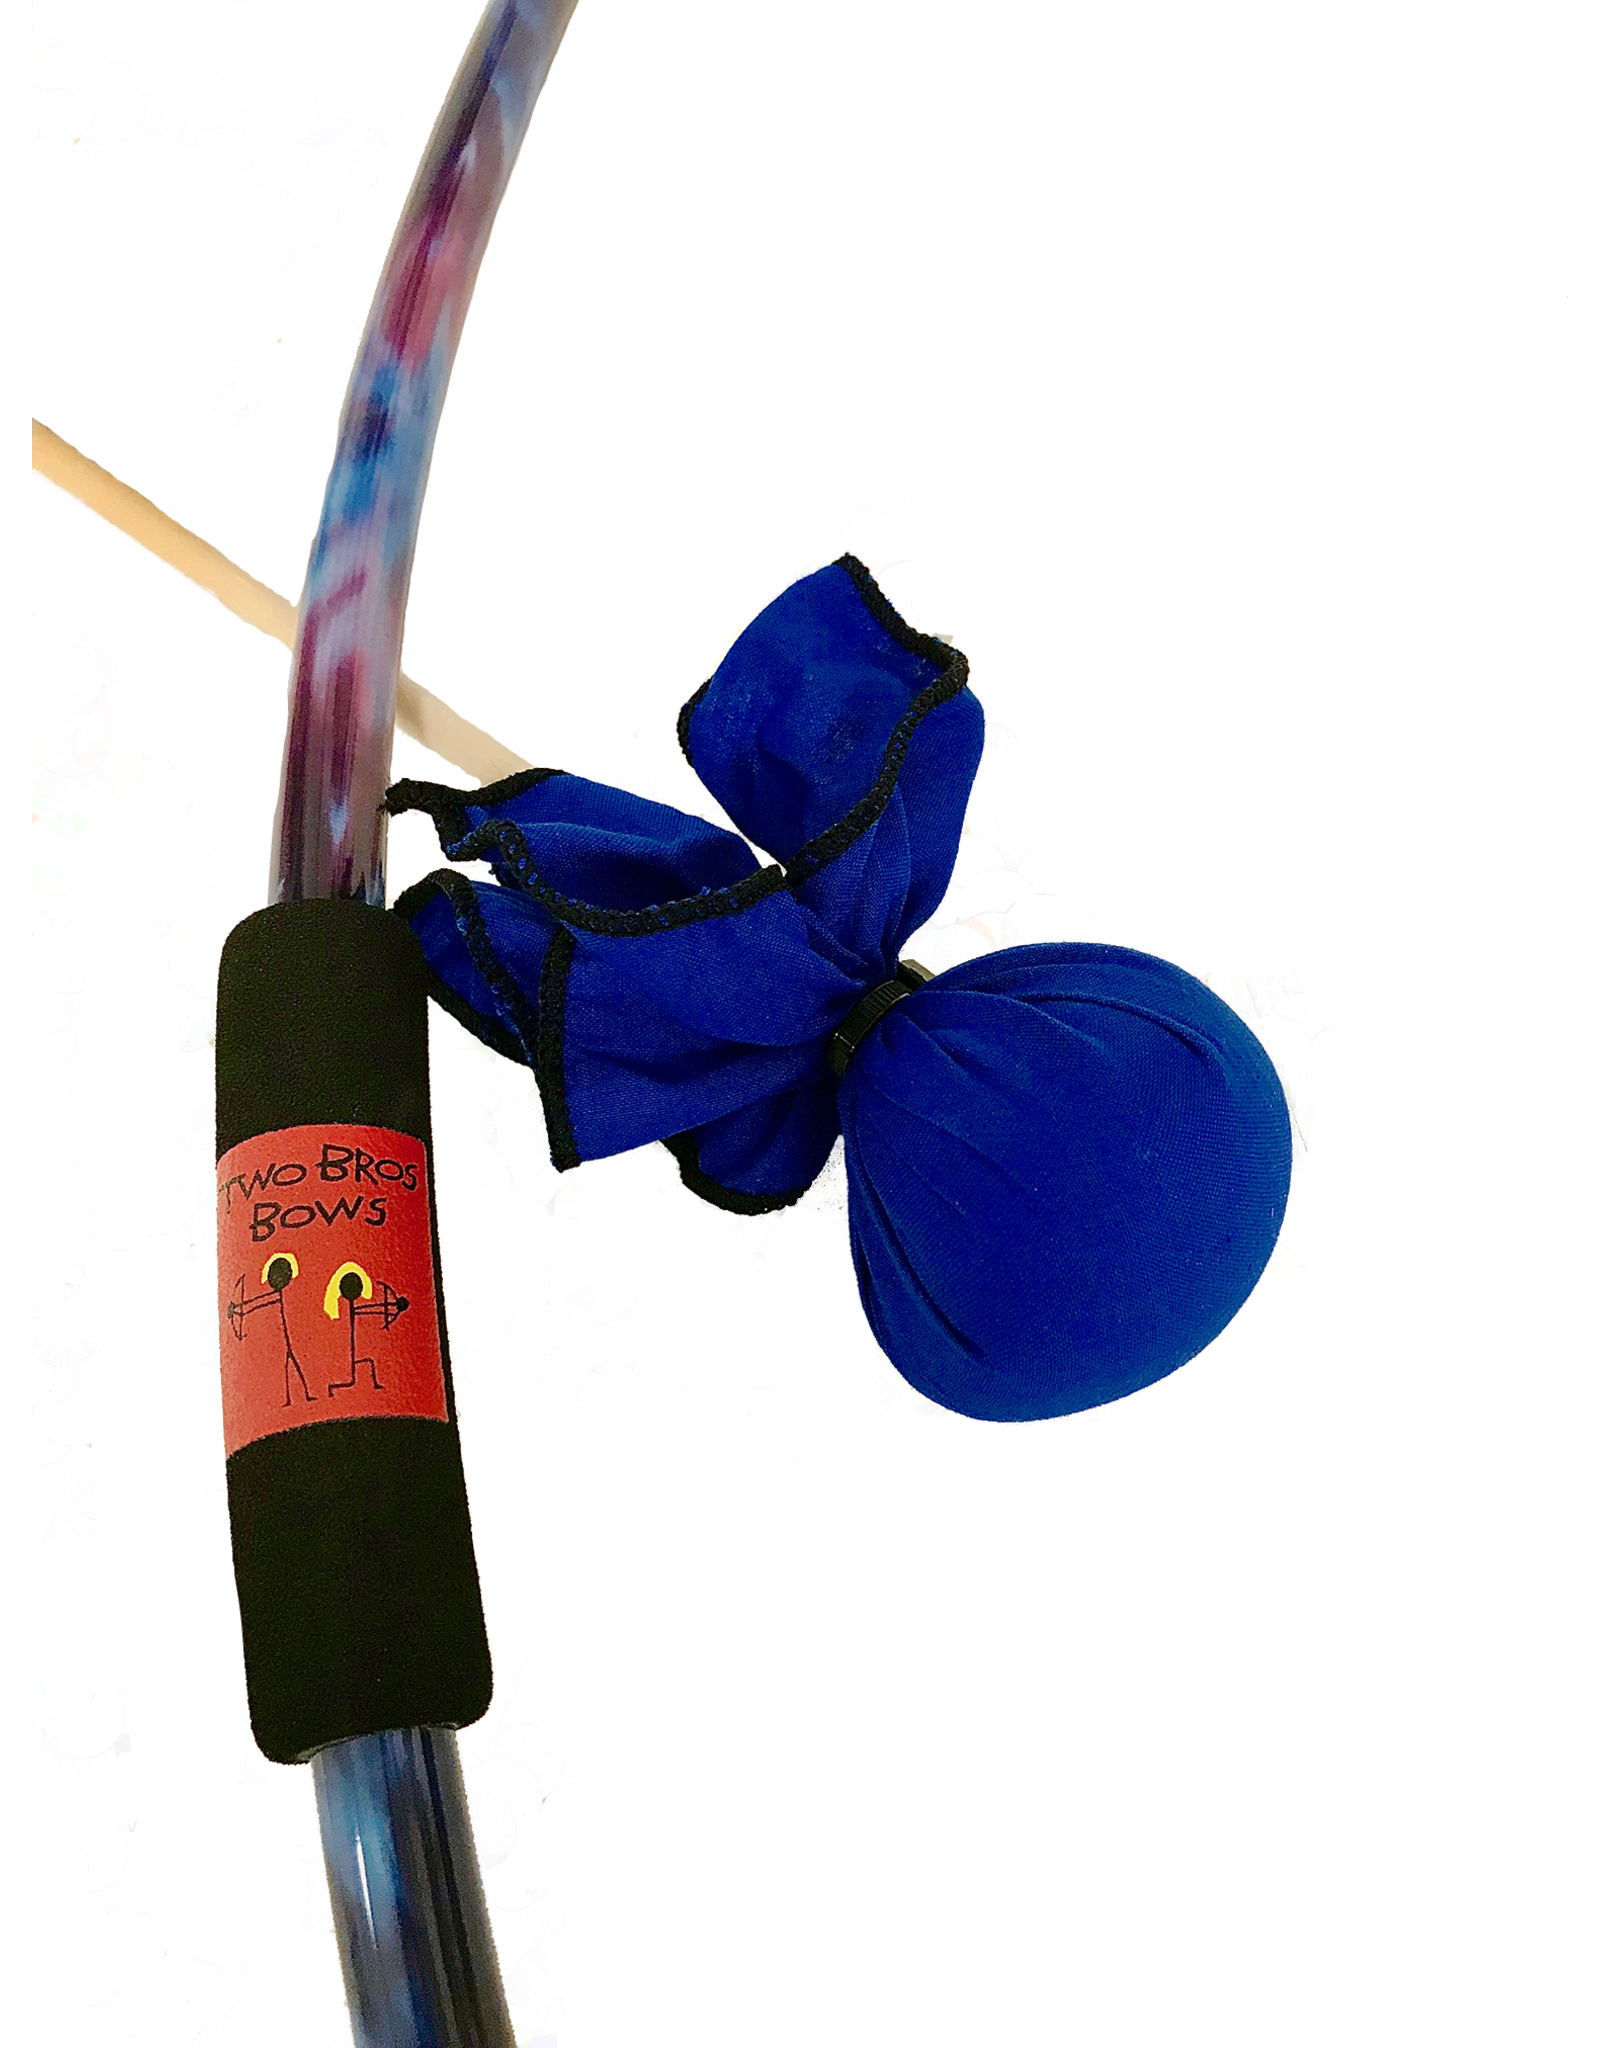 Blue Tie Dye Bow, 2 Arrows and Small Bullseye